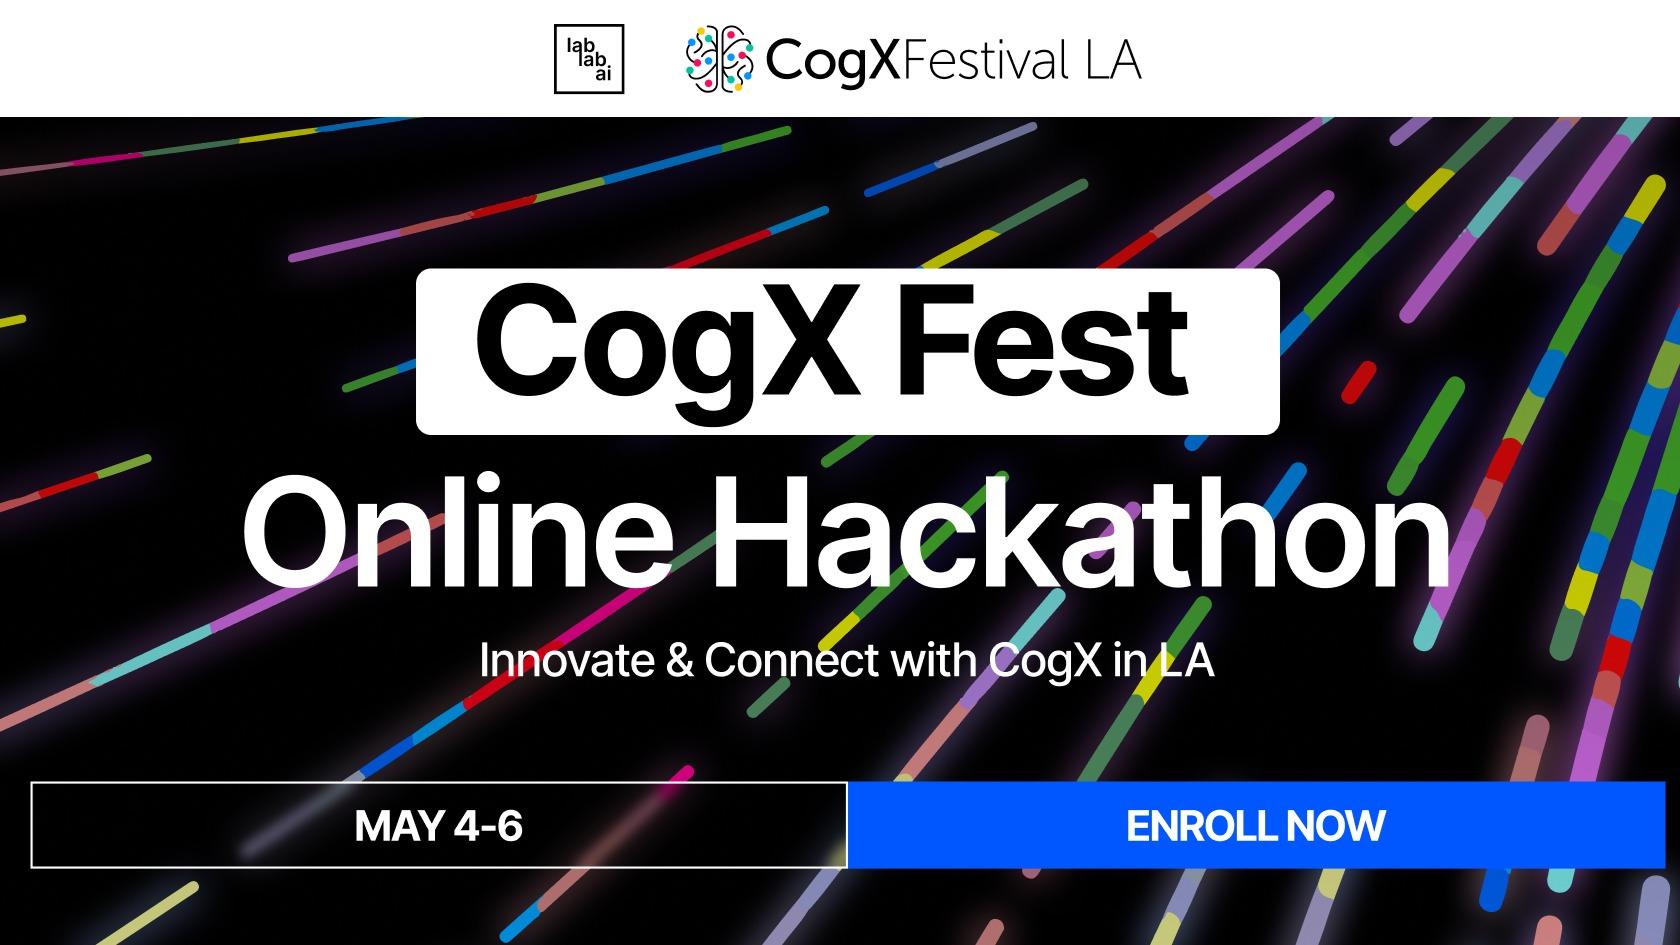 CogX Fest Online Hackathon 